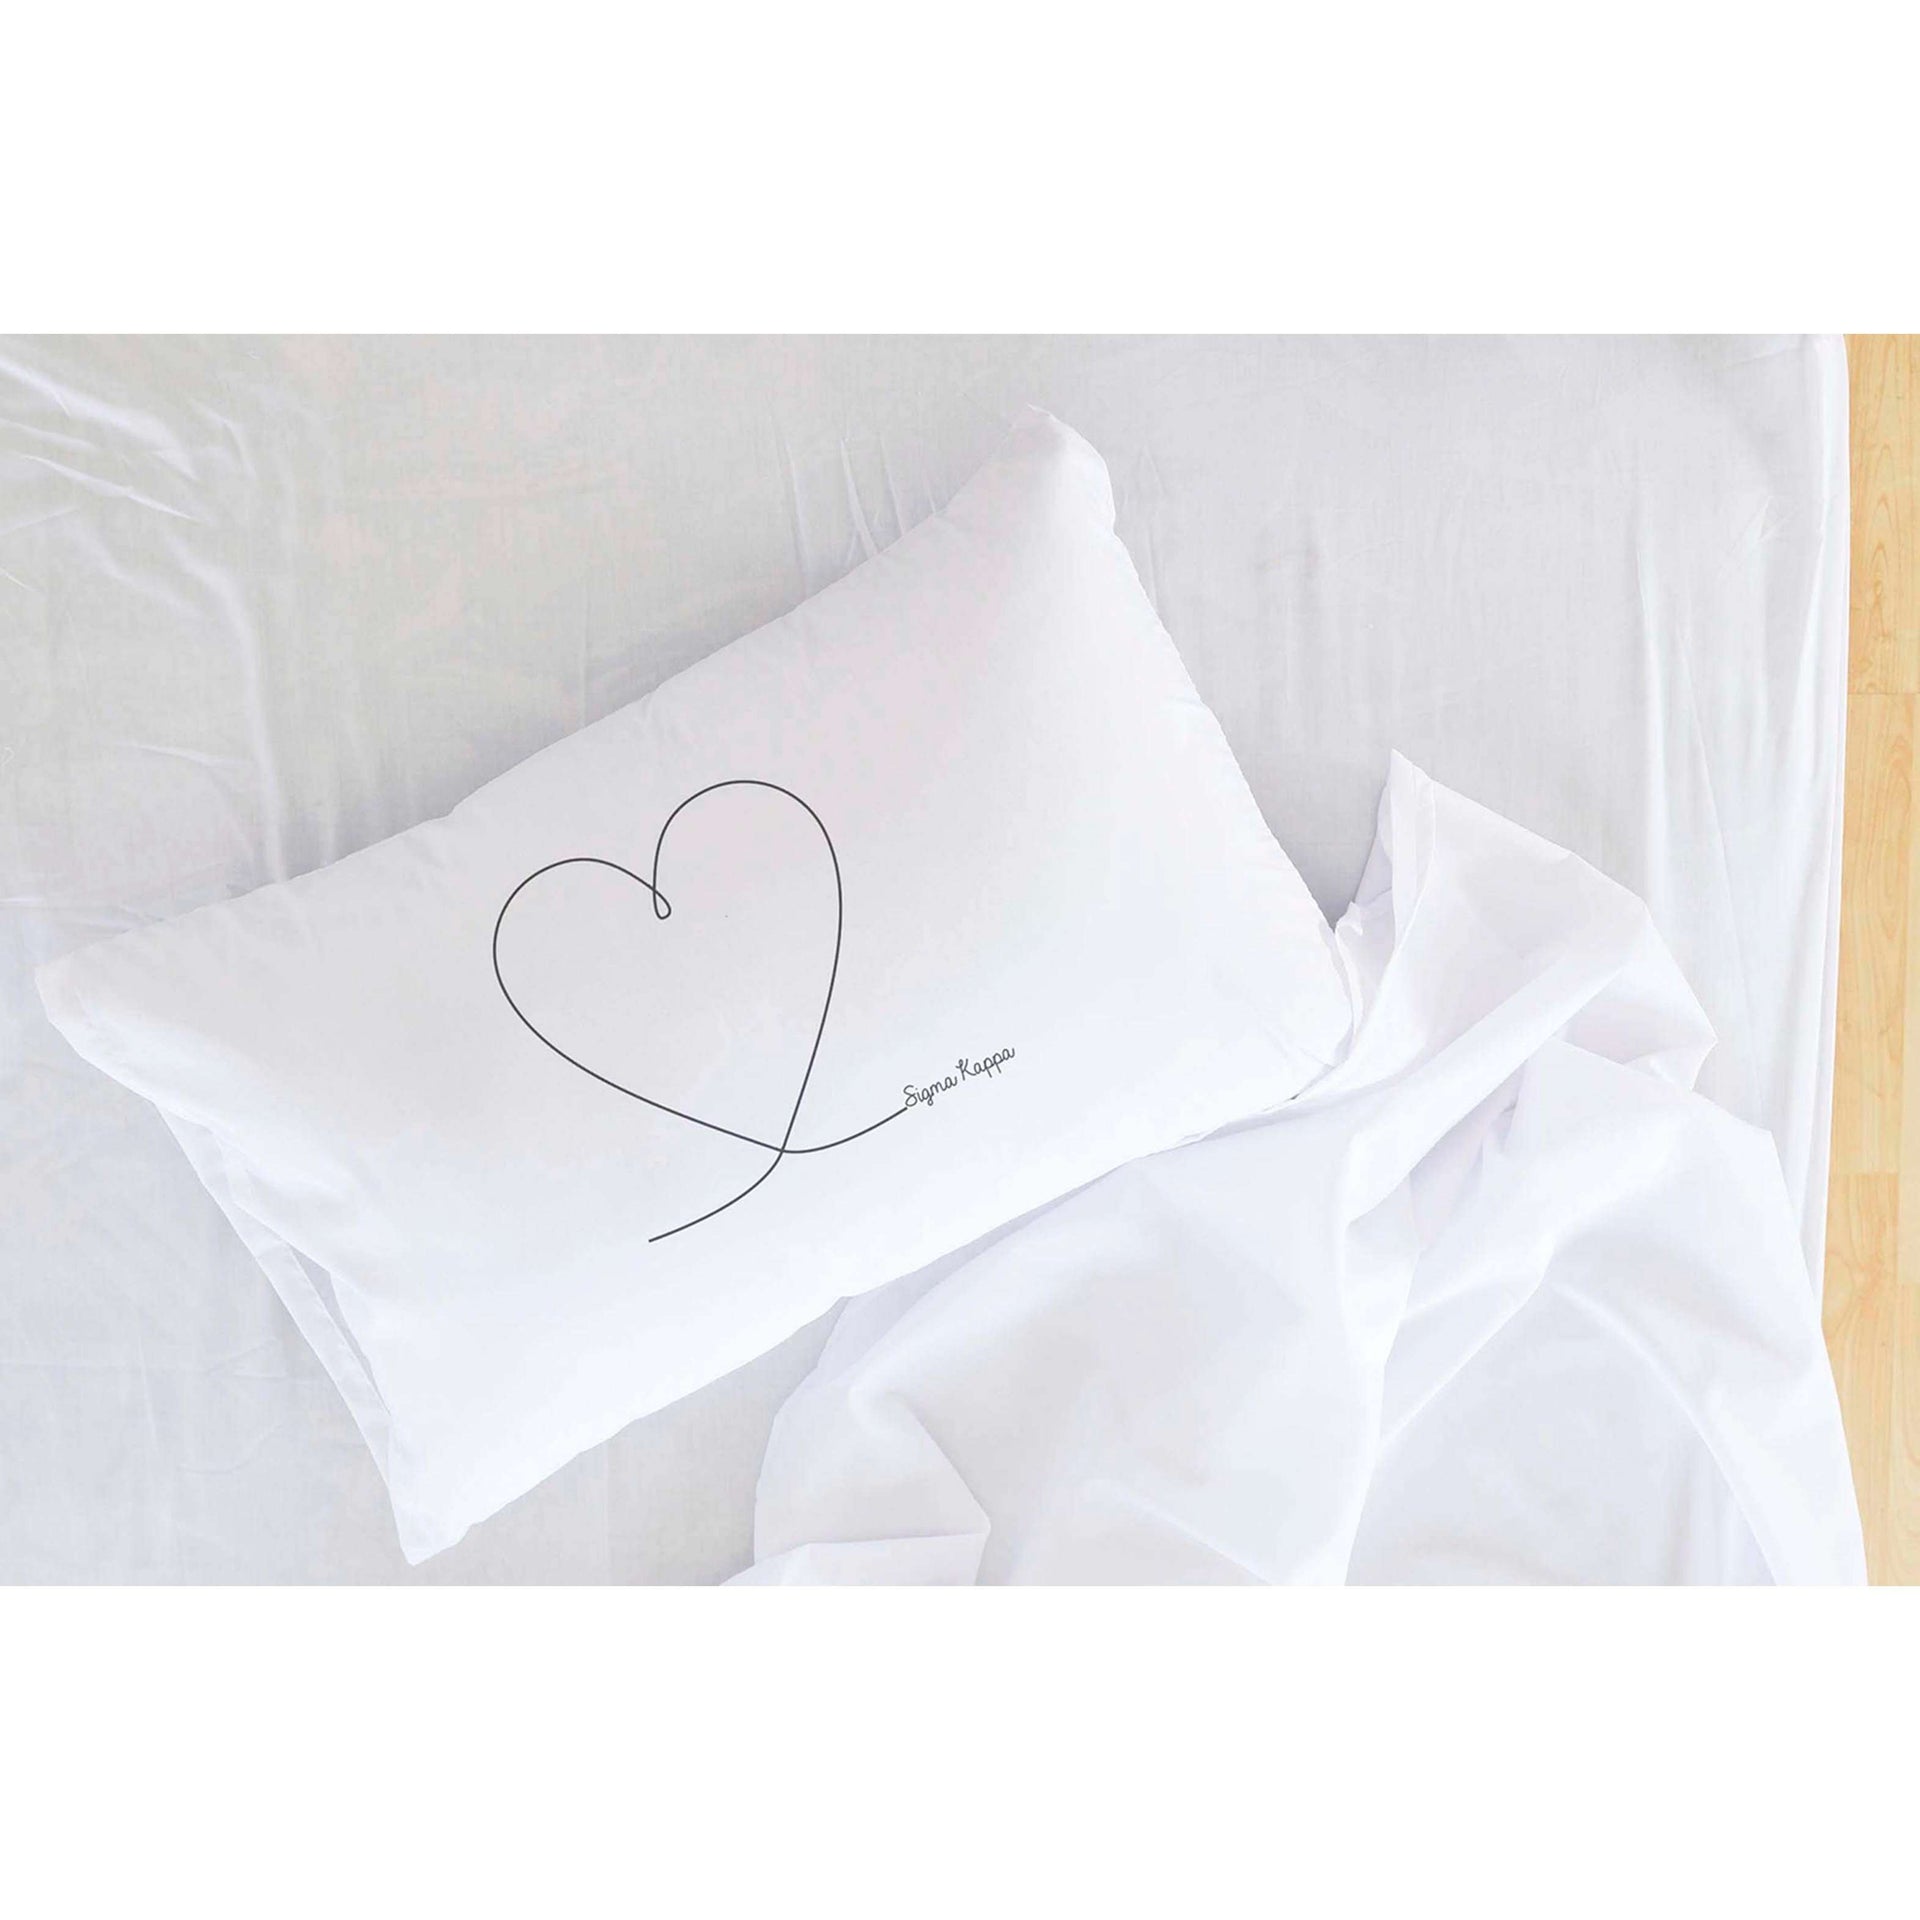 Sorority name in handwriting heart design custom printed on pillowcase.